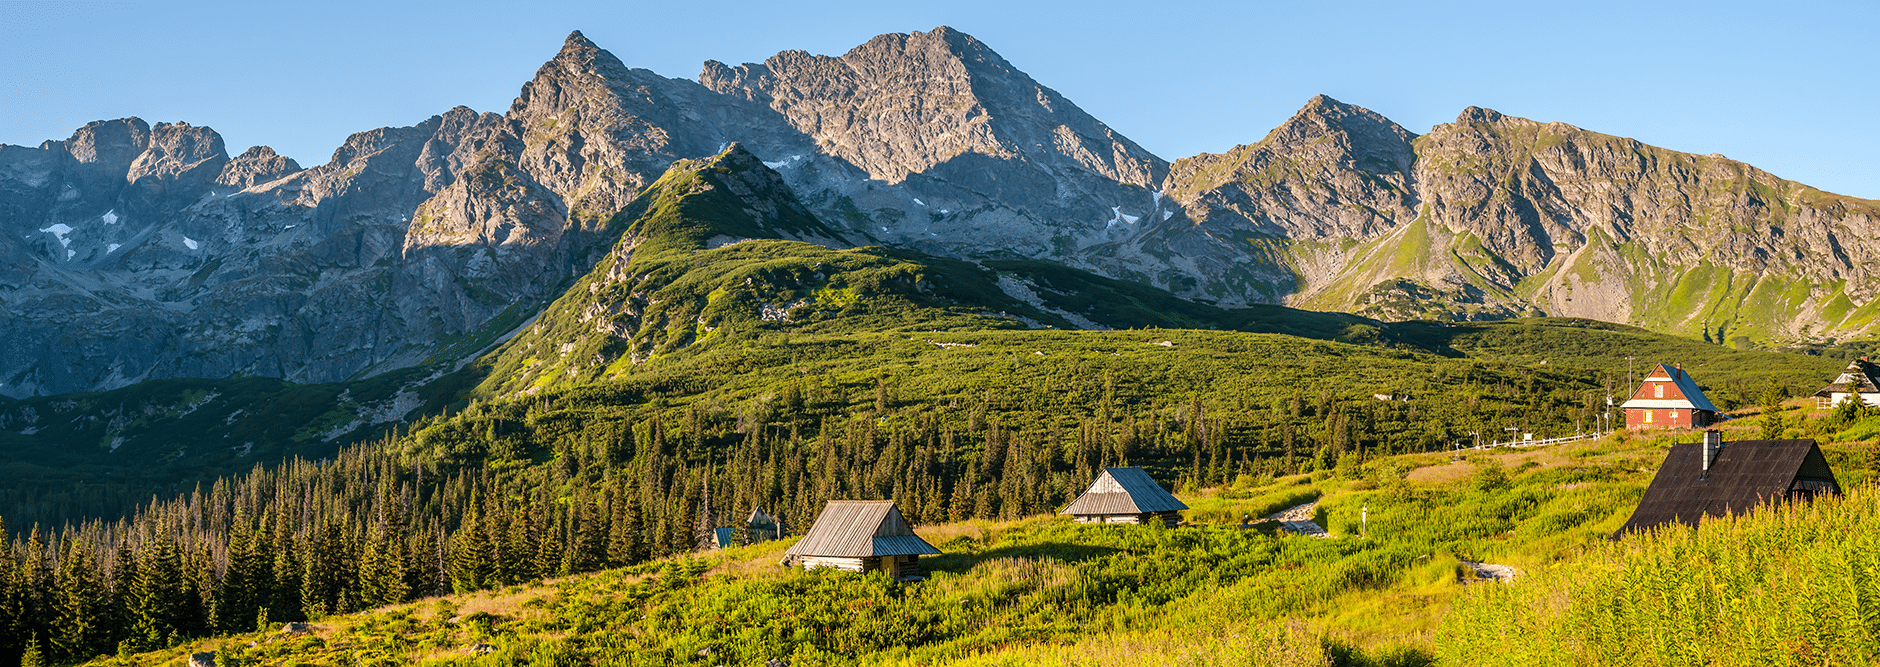 domek w Tatrach